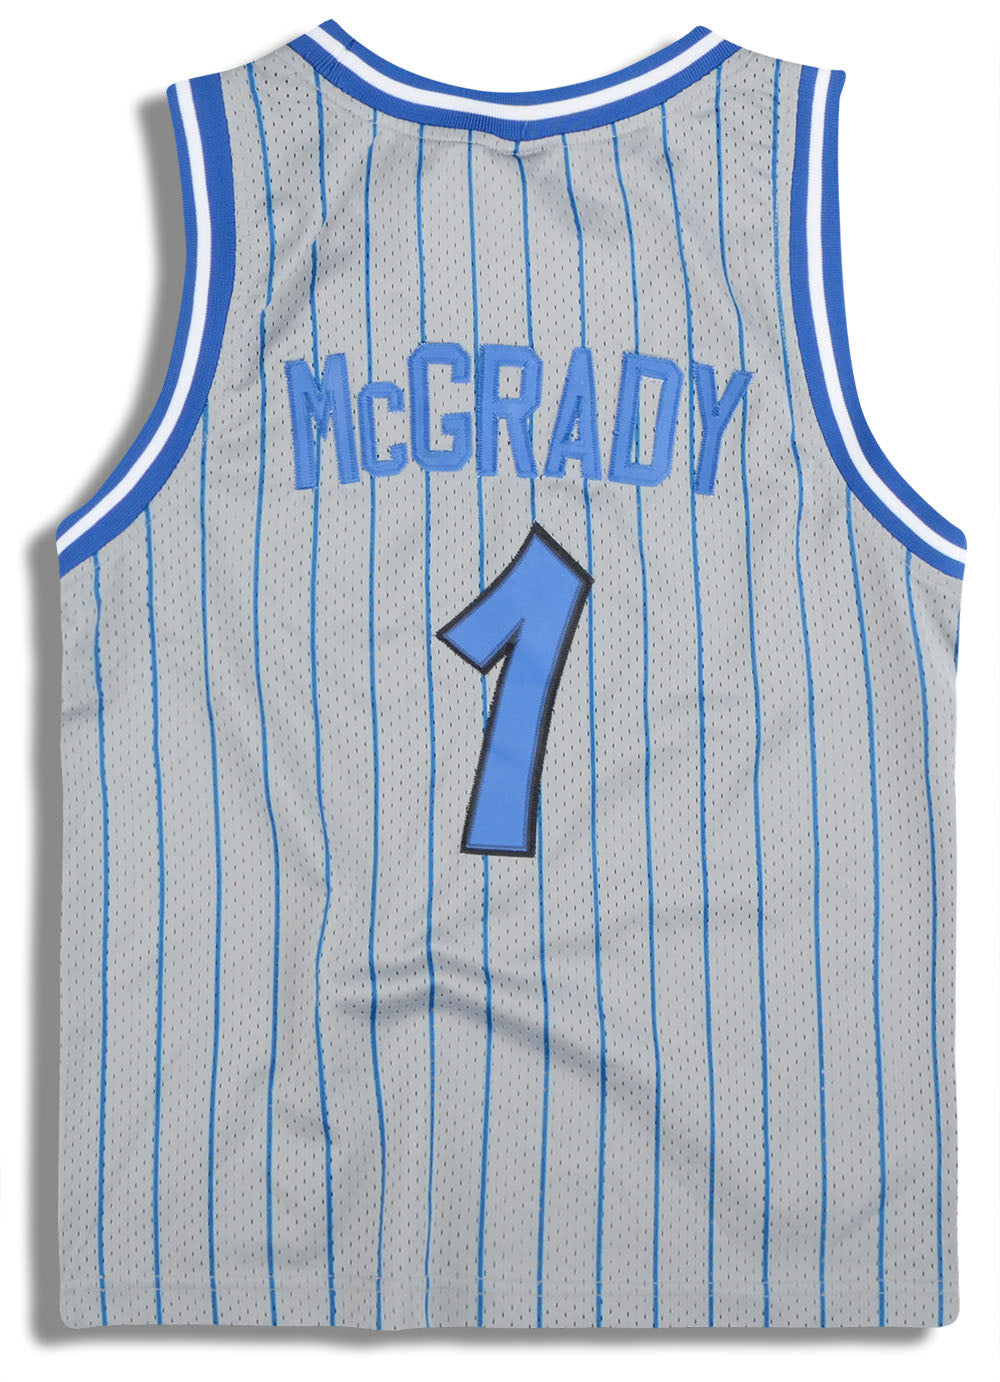 Vintage Tracy Mcgrady 1 Orlando Magic Throwback Jersey Nike 